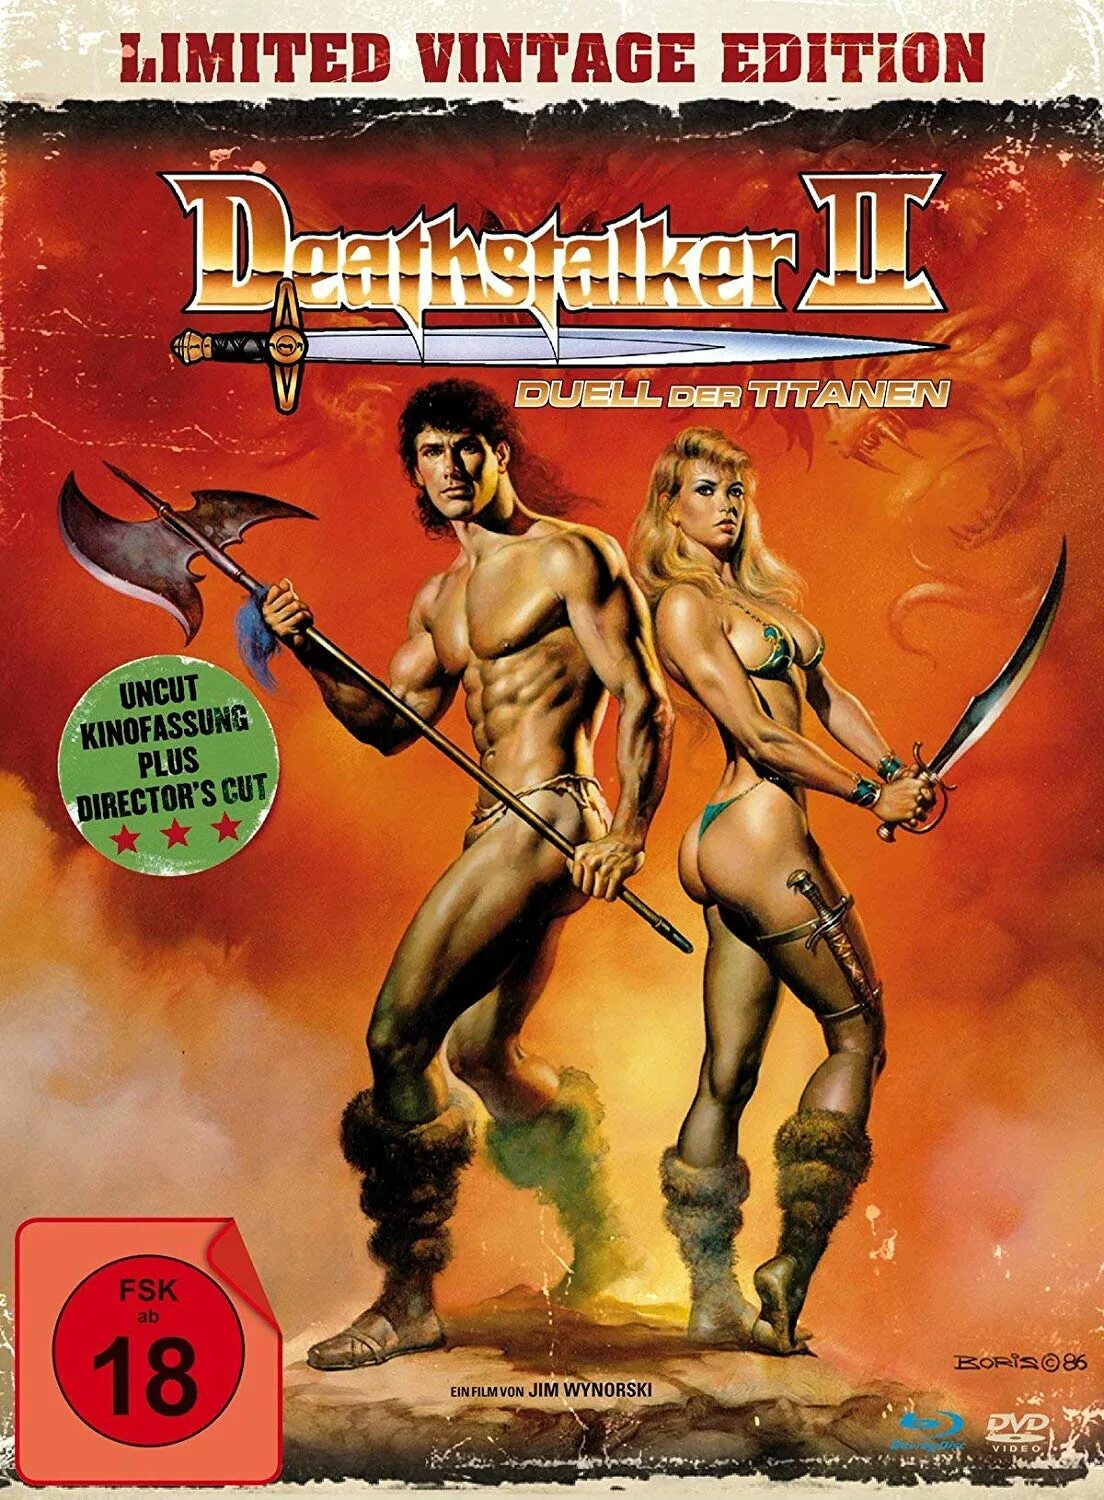 Ловчий смерти 2: битва титанов / Deathstalker II. Постер Deathstalker II 1987. Ловчий смерти 1983 Постер. Магическая битва 2 блю рей